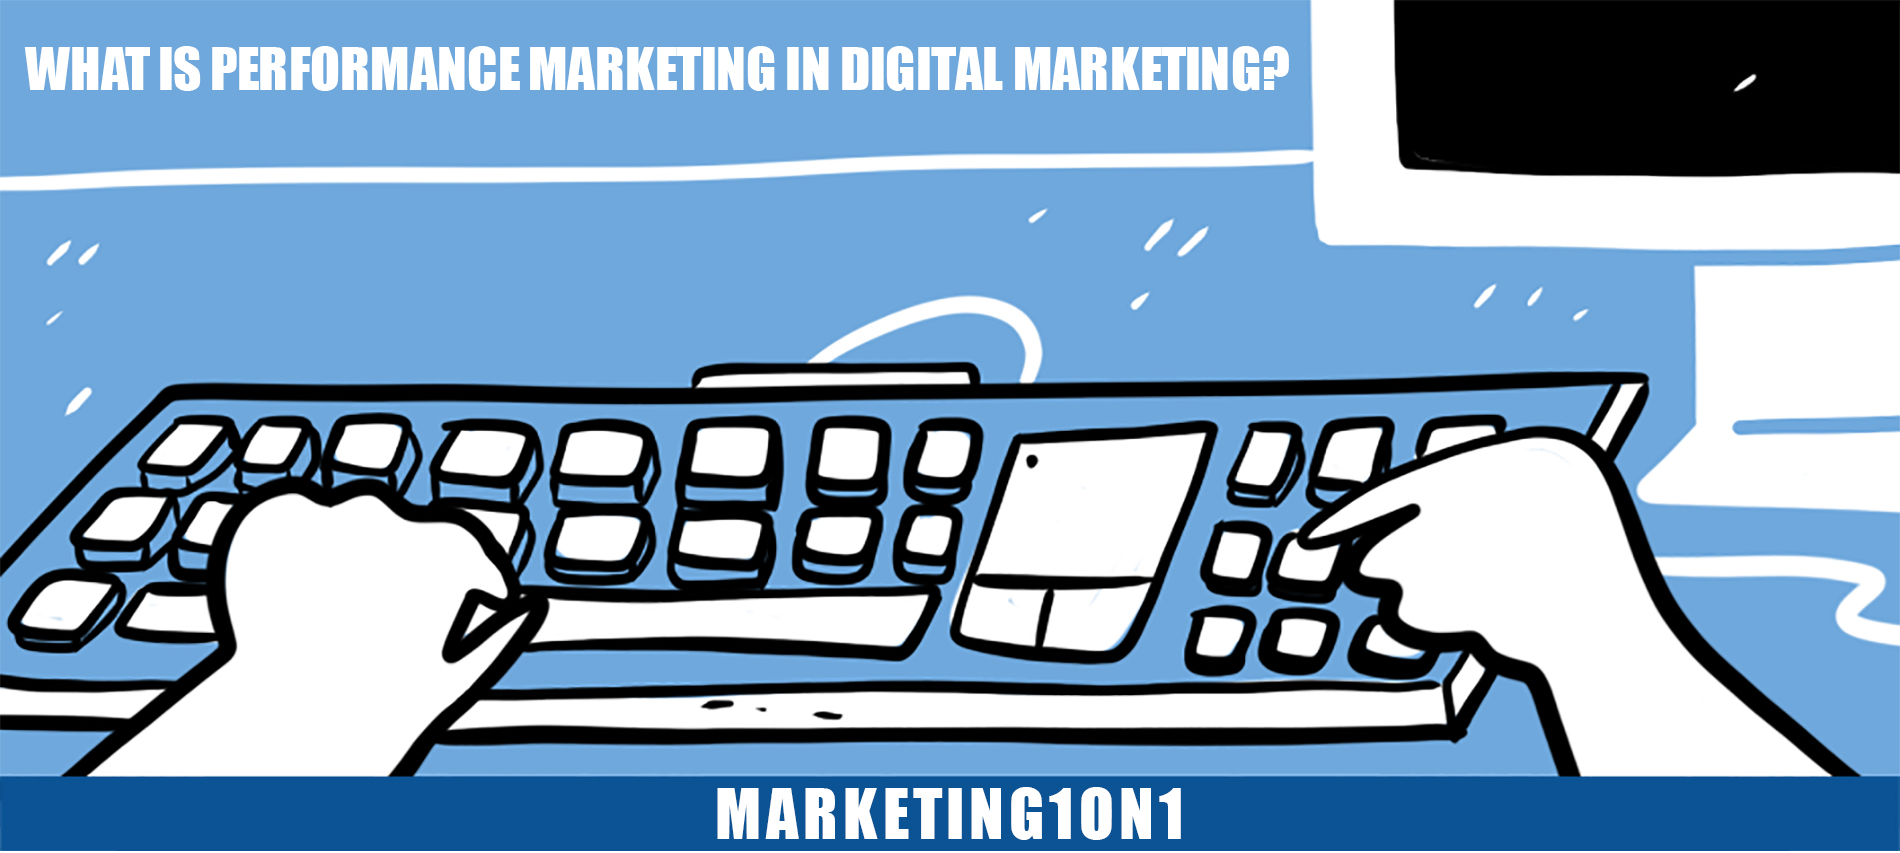 what-is-performance-marketing-in-digital-marketing-img.jpg